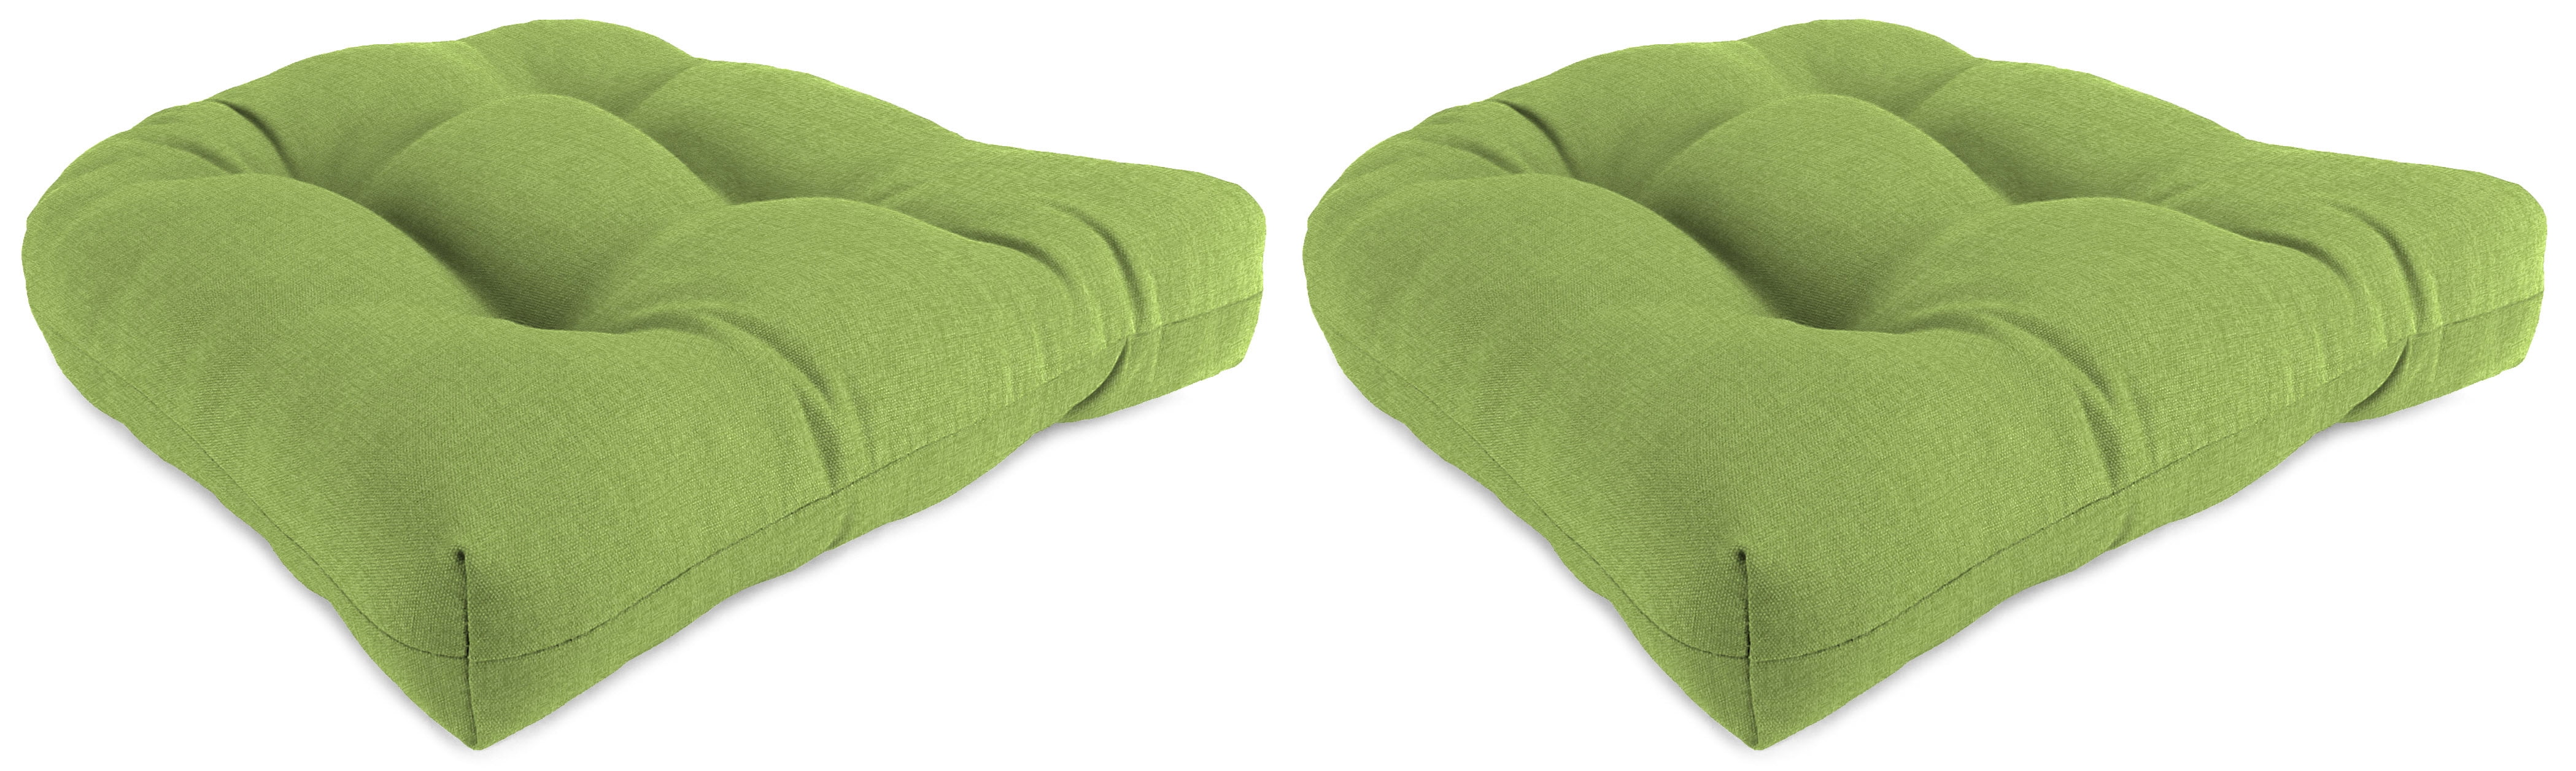 Set of Two, 19" x 19" x 4" Outdoor Wicker Chair Cushions - Walmart.com